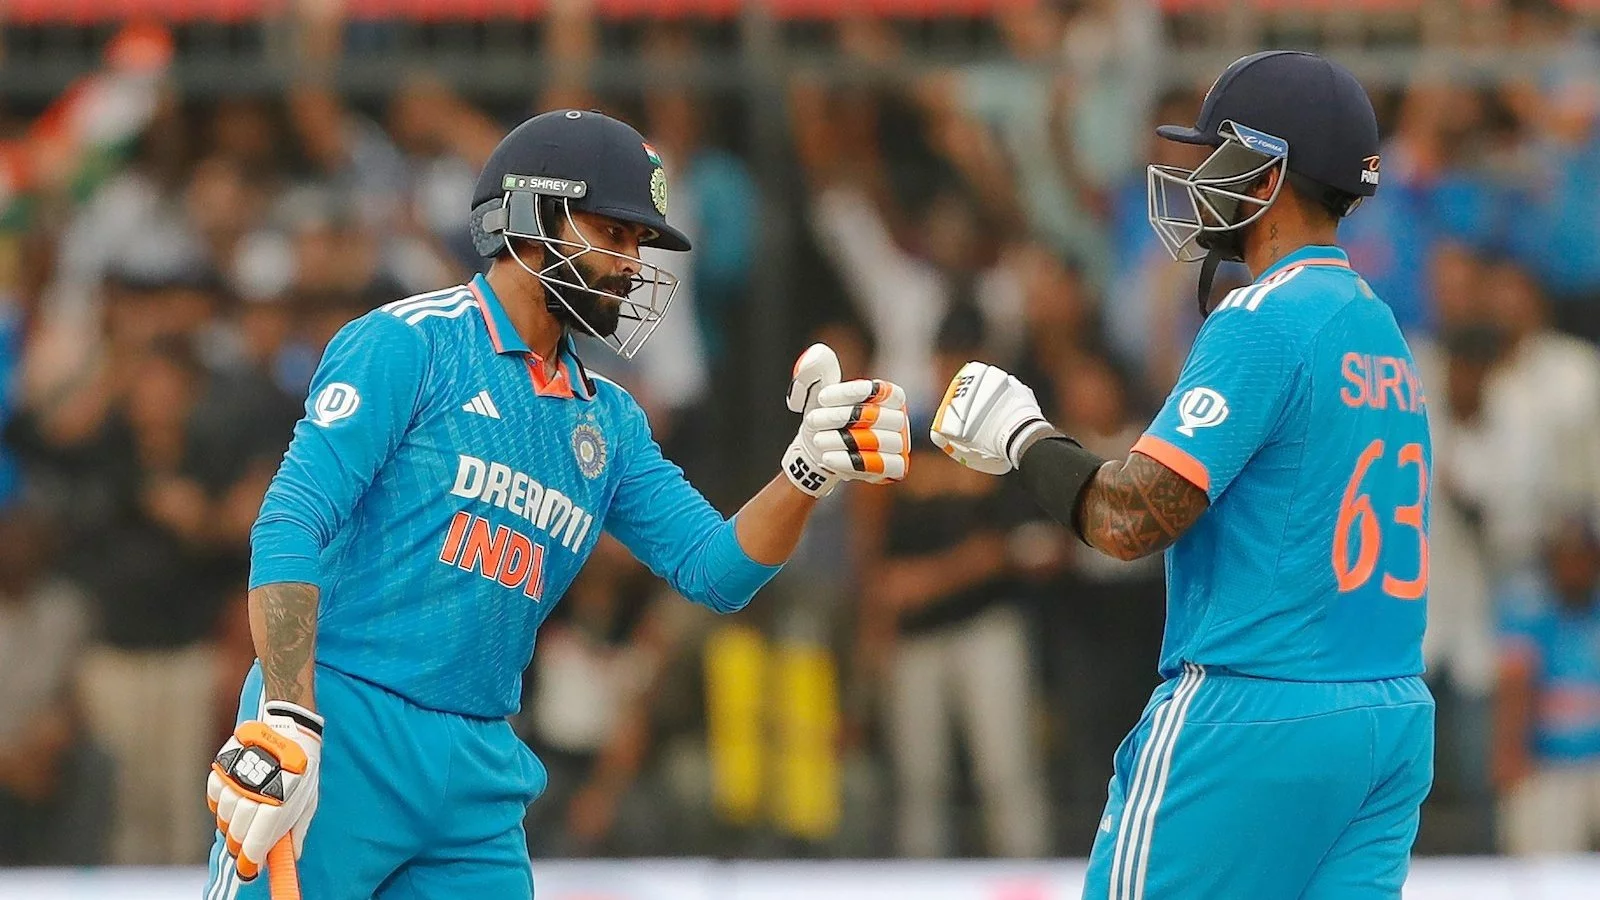 India vs Australia, 2nd ODI: ٹیم انڈیا کے بلےبازوں  نے آسٹریلیا کے خلاف کردی رنوں کی برسات، جیتنے کیلئے دیا 400رنوں کا ہمالیائی اسکور